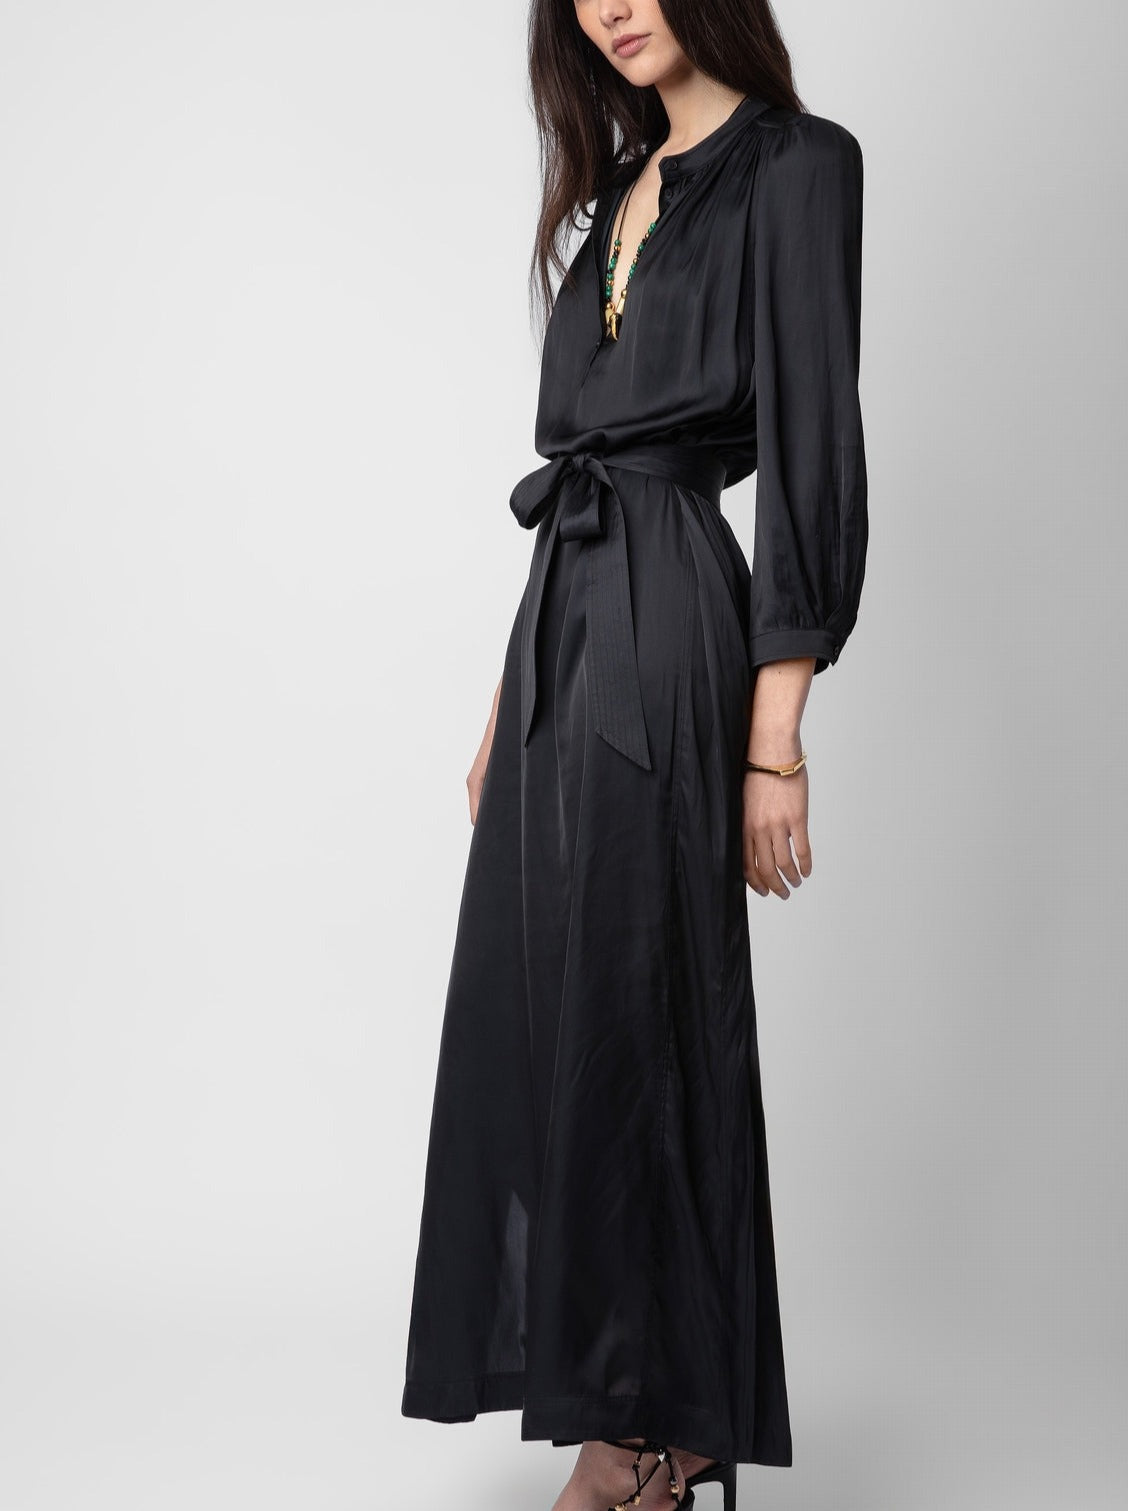 RITCHIL SATIN dress, black